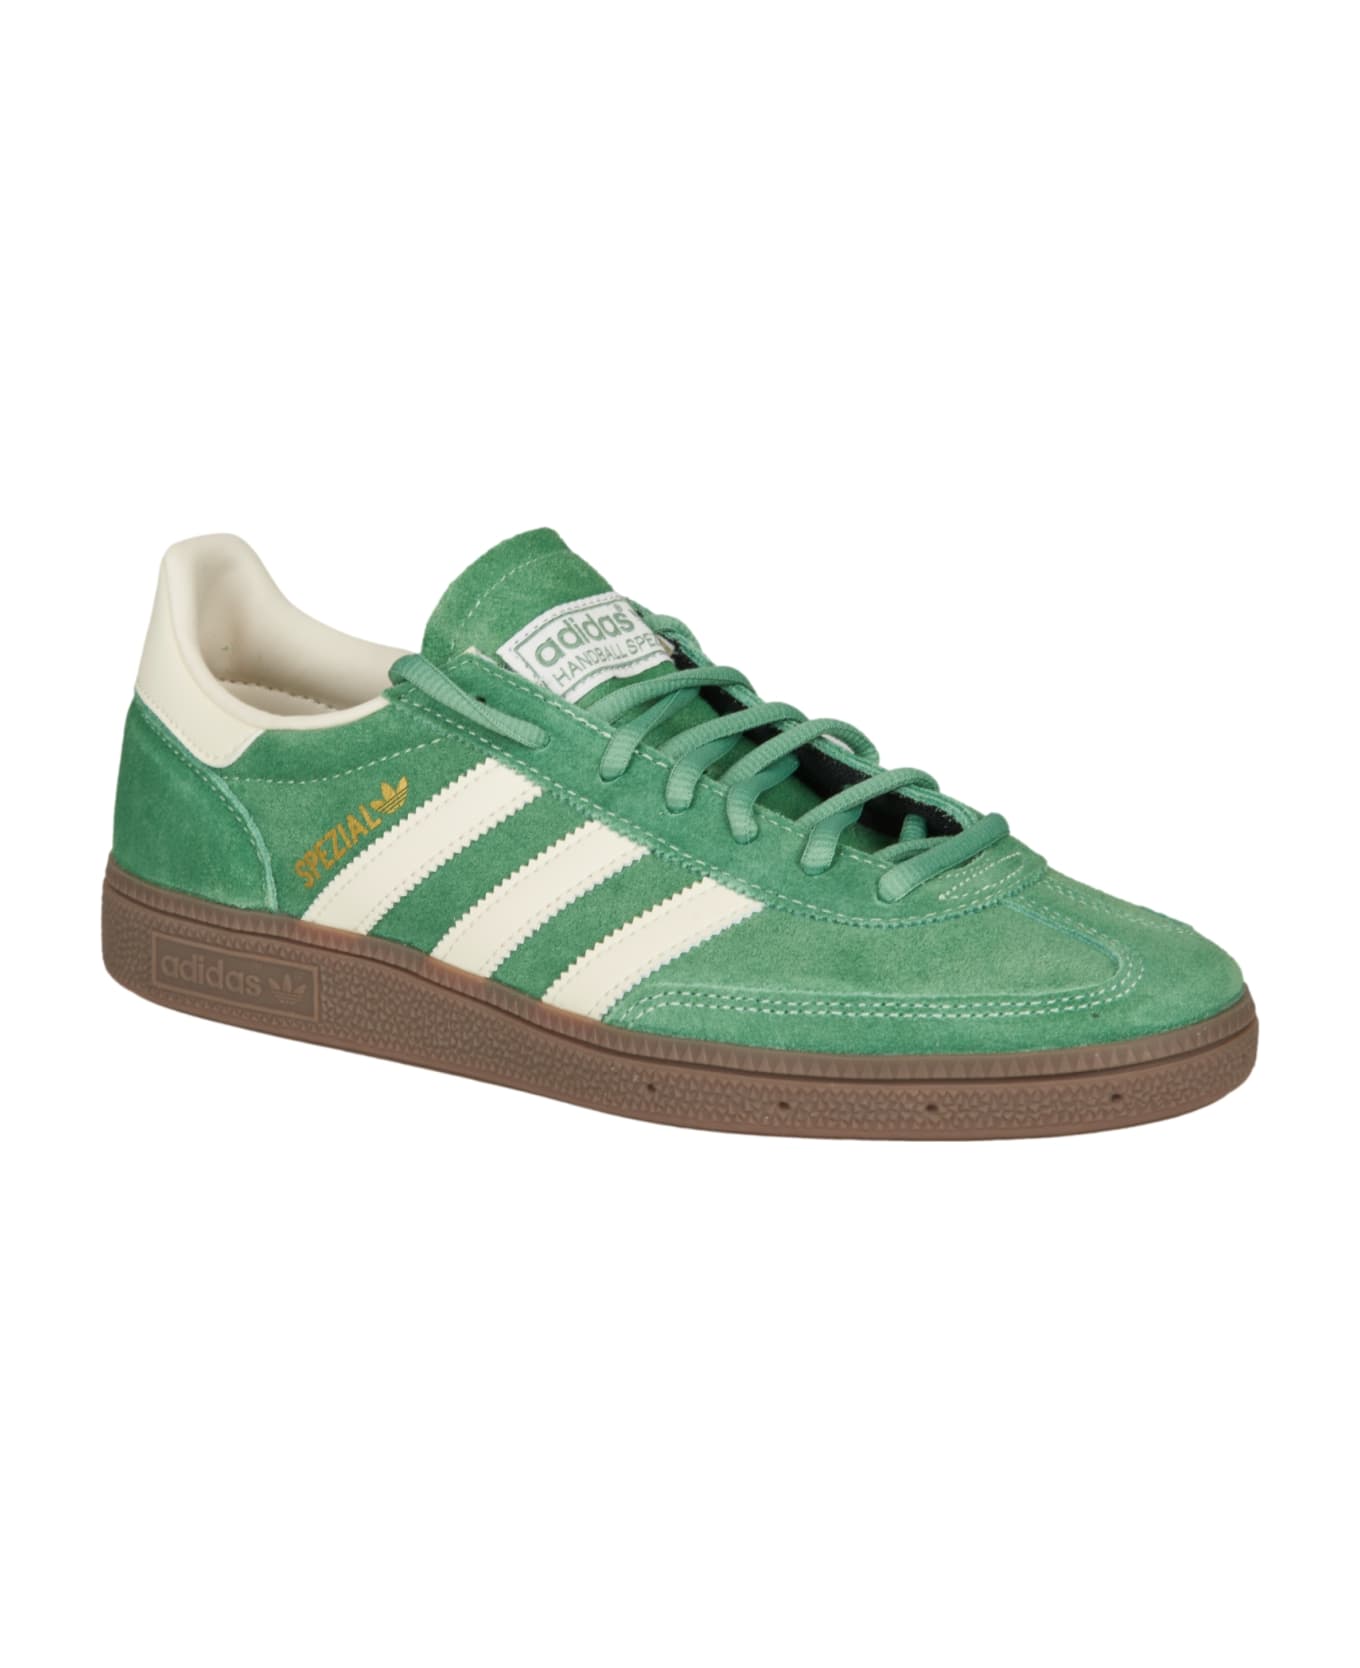 Adidas Handball Special Sneakers - Green